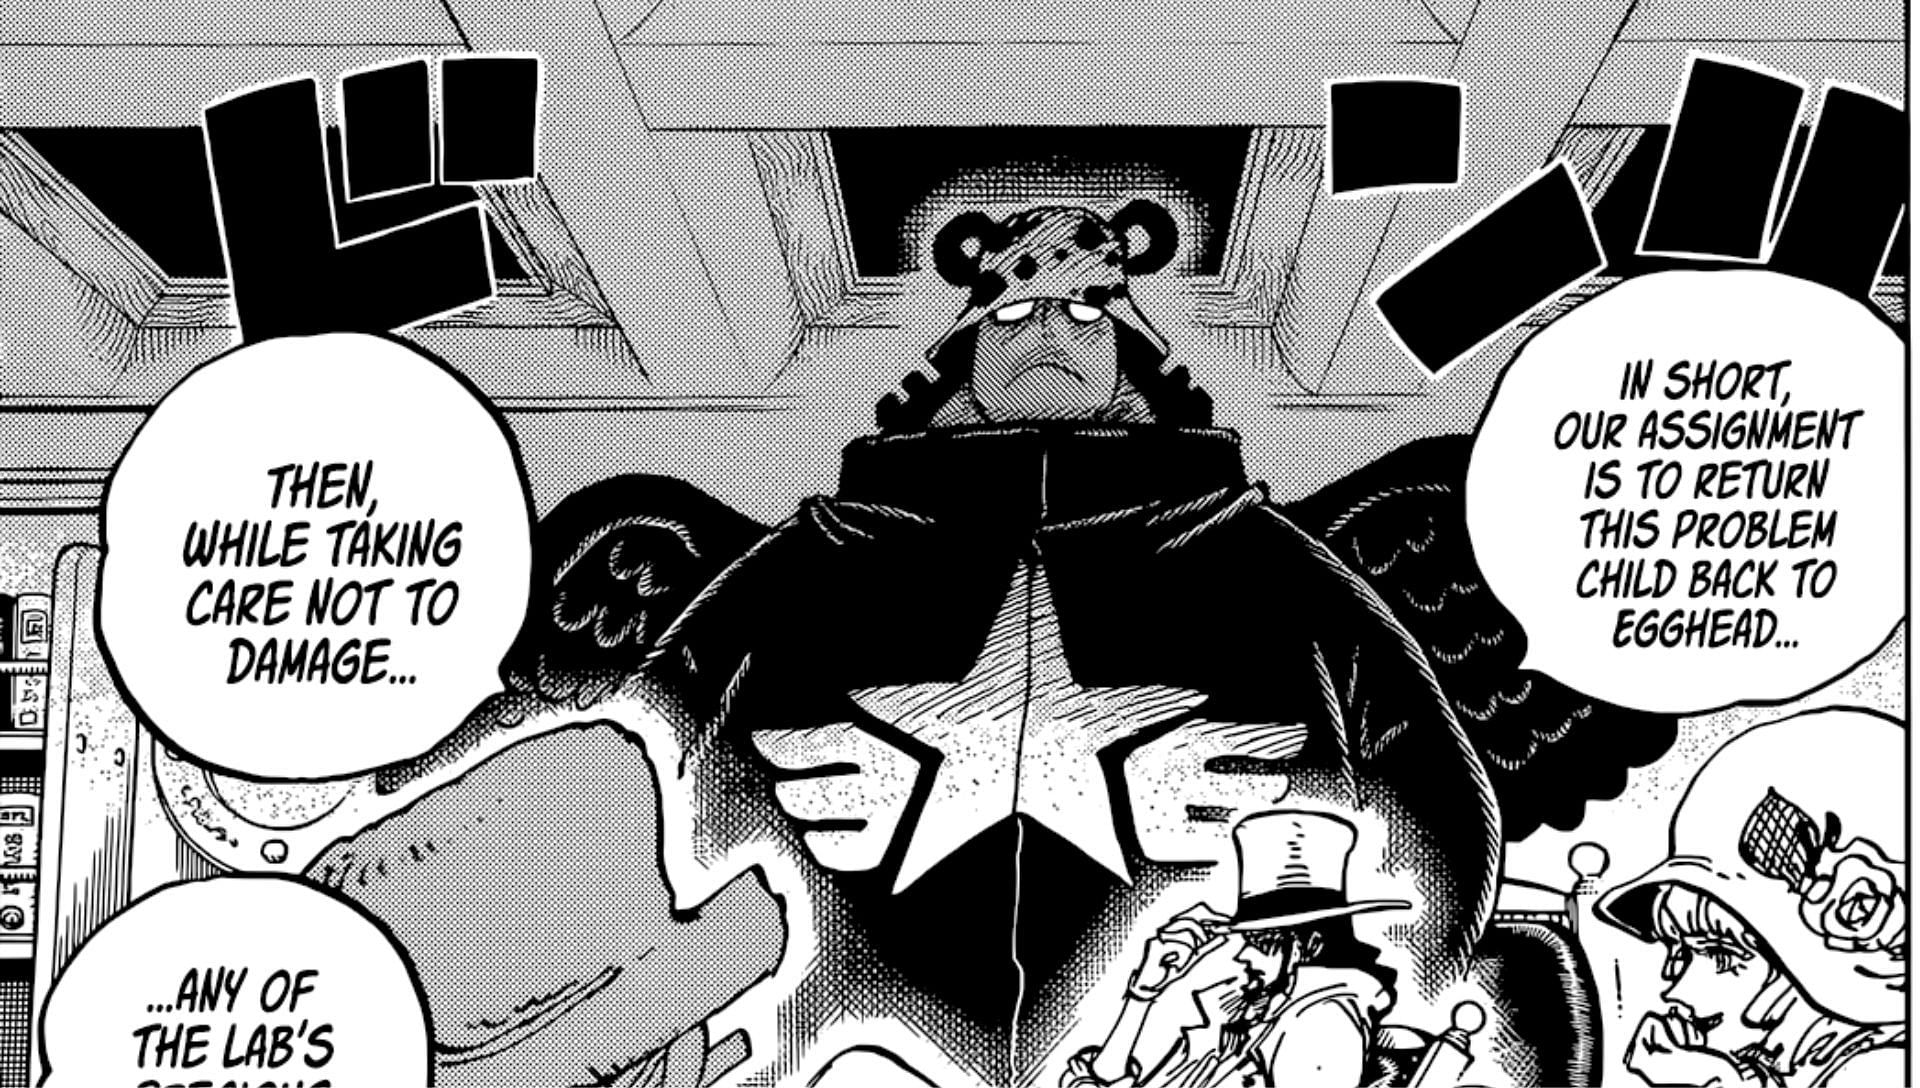 S-Bear as shown in One Piece manga (Image via Shueisha)